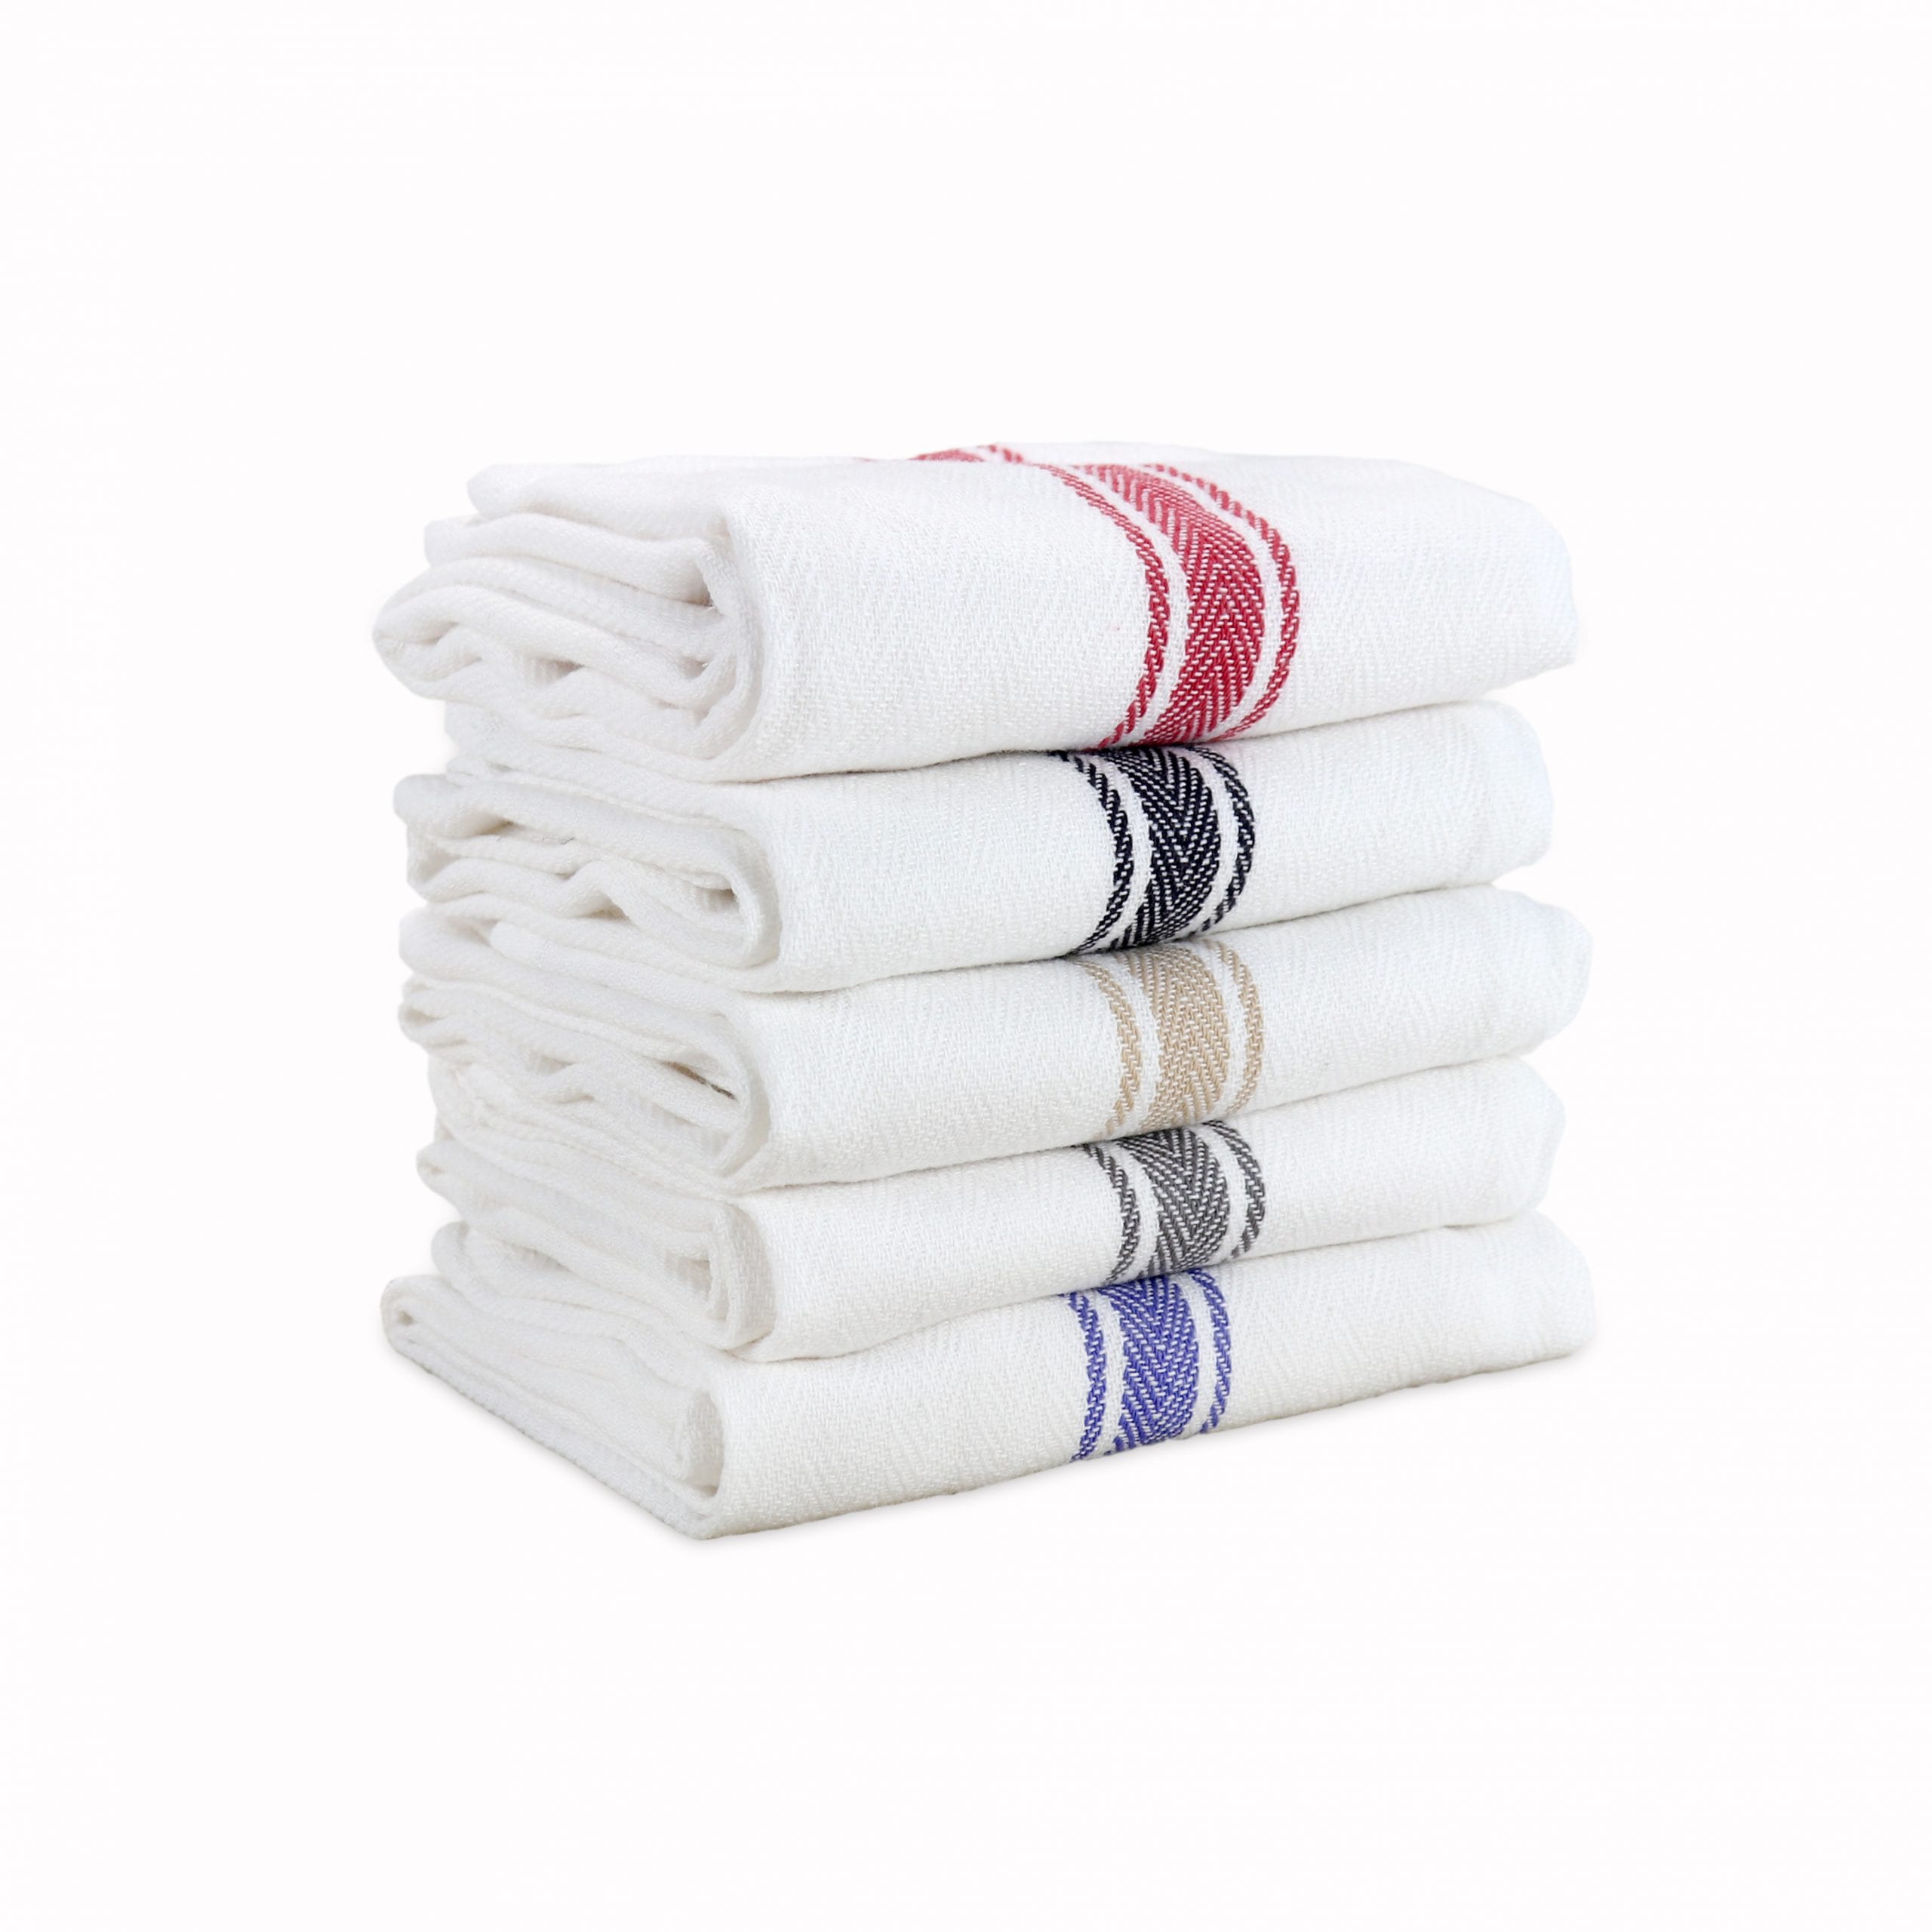 24 white cotton hotel bath towels 22x44 hotel spa resort irg tanning bath linen 